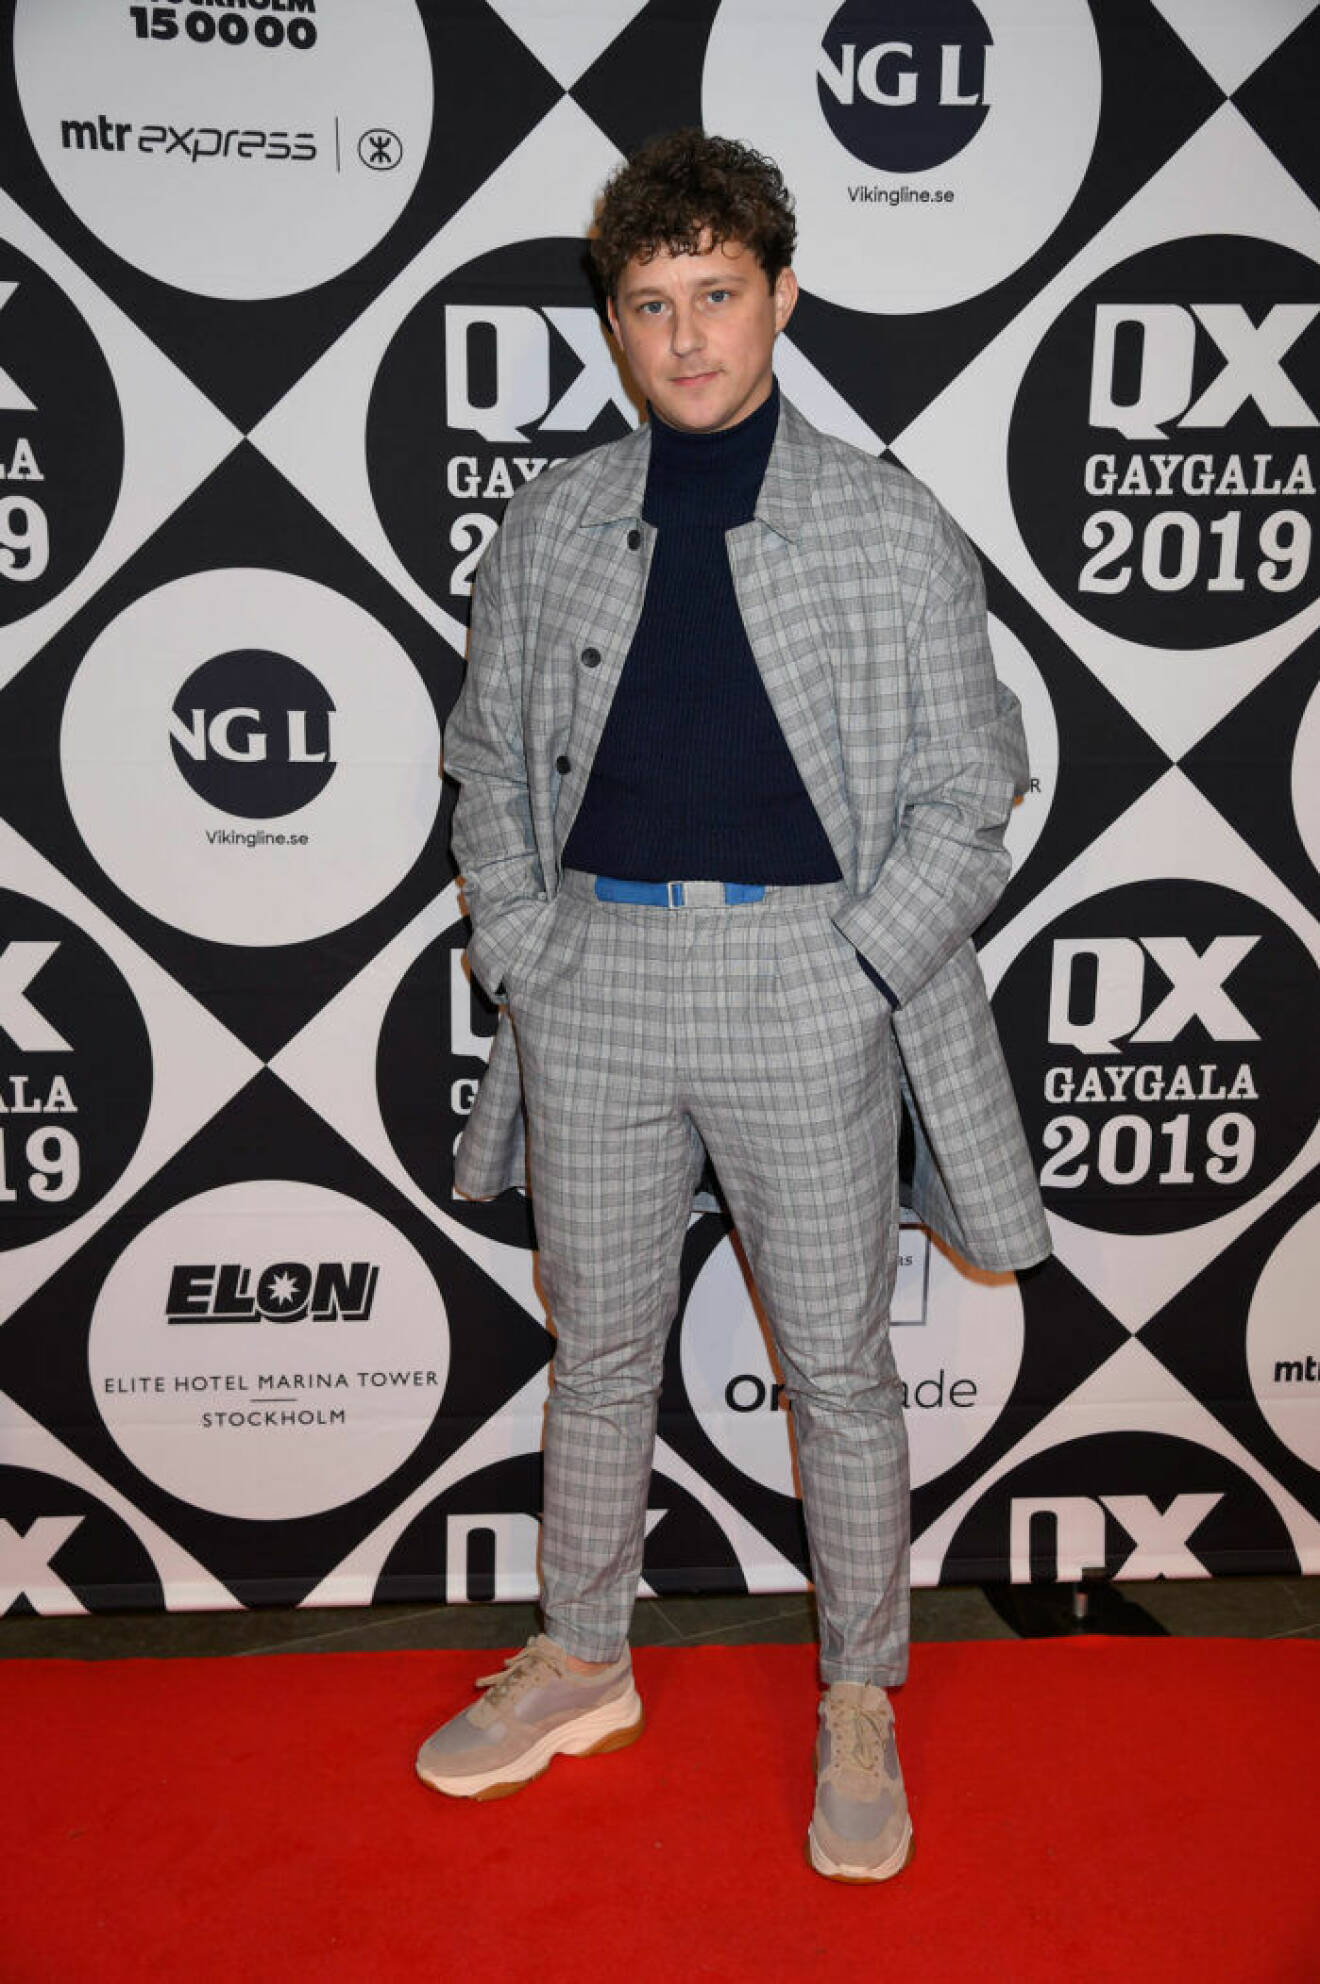 Charlie Gustafsson på QX-galan 2019